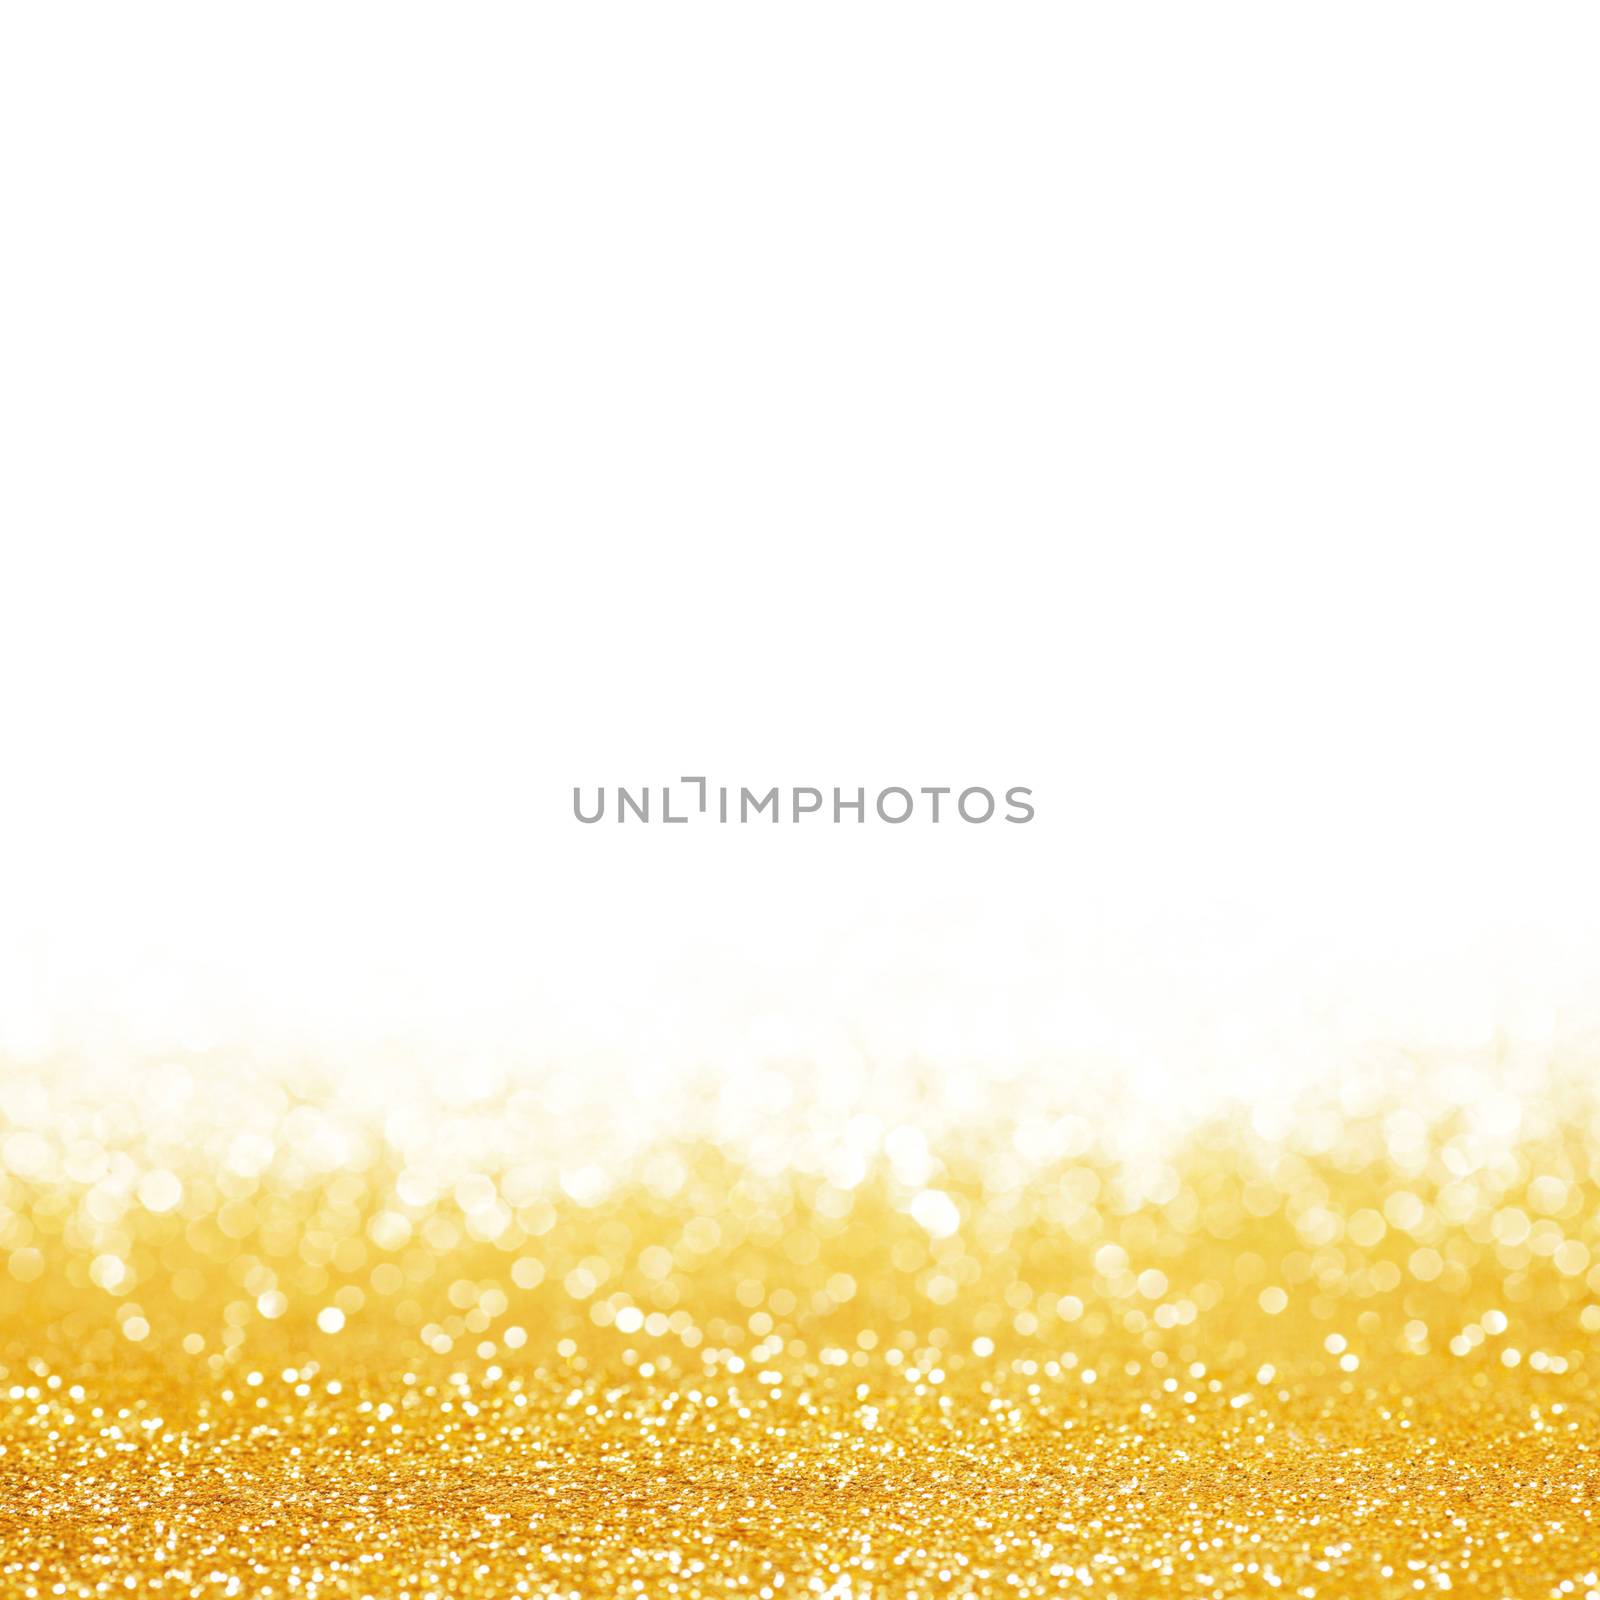 Golden festive glitter background with defocused lights